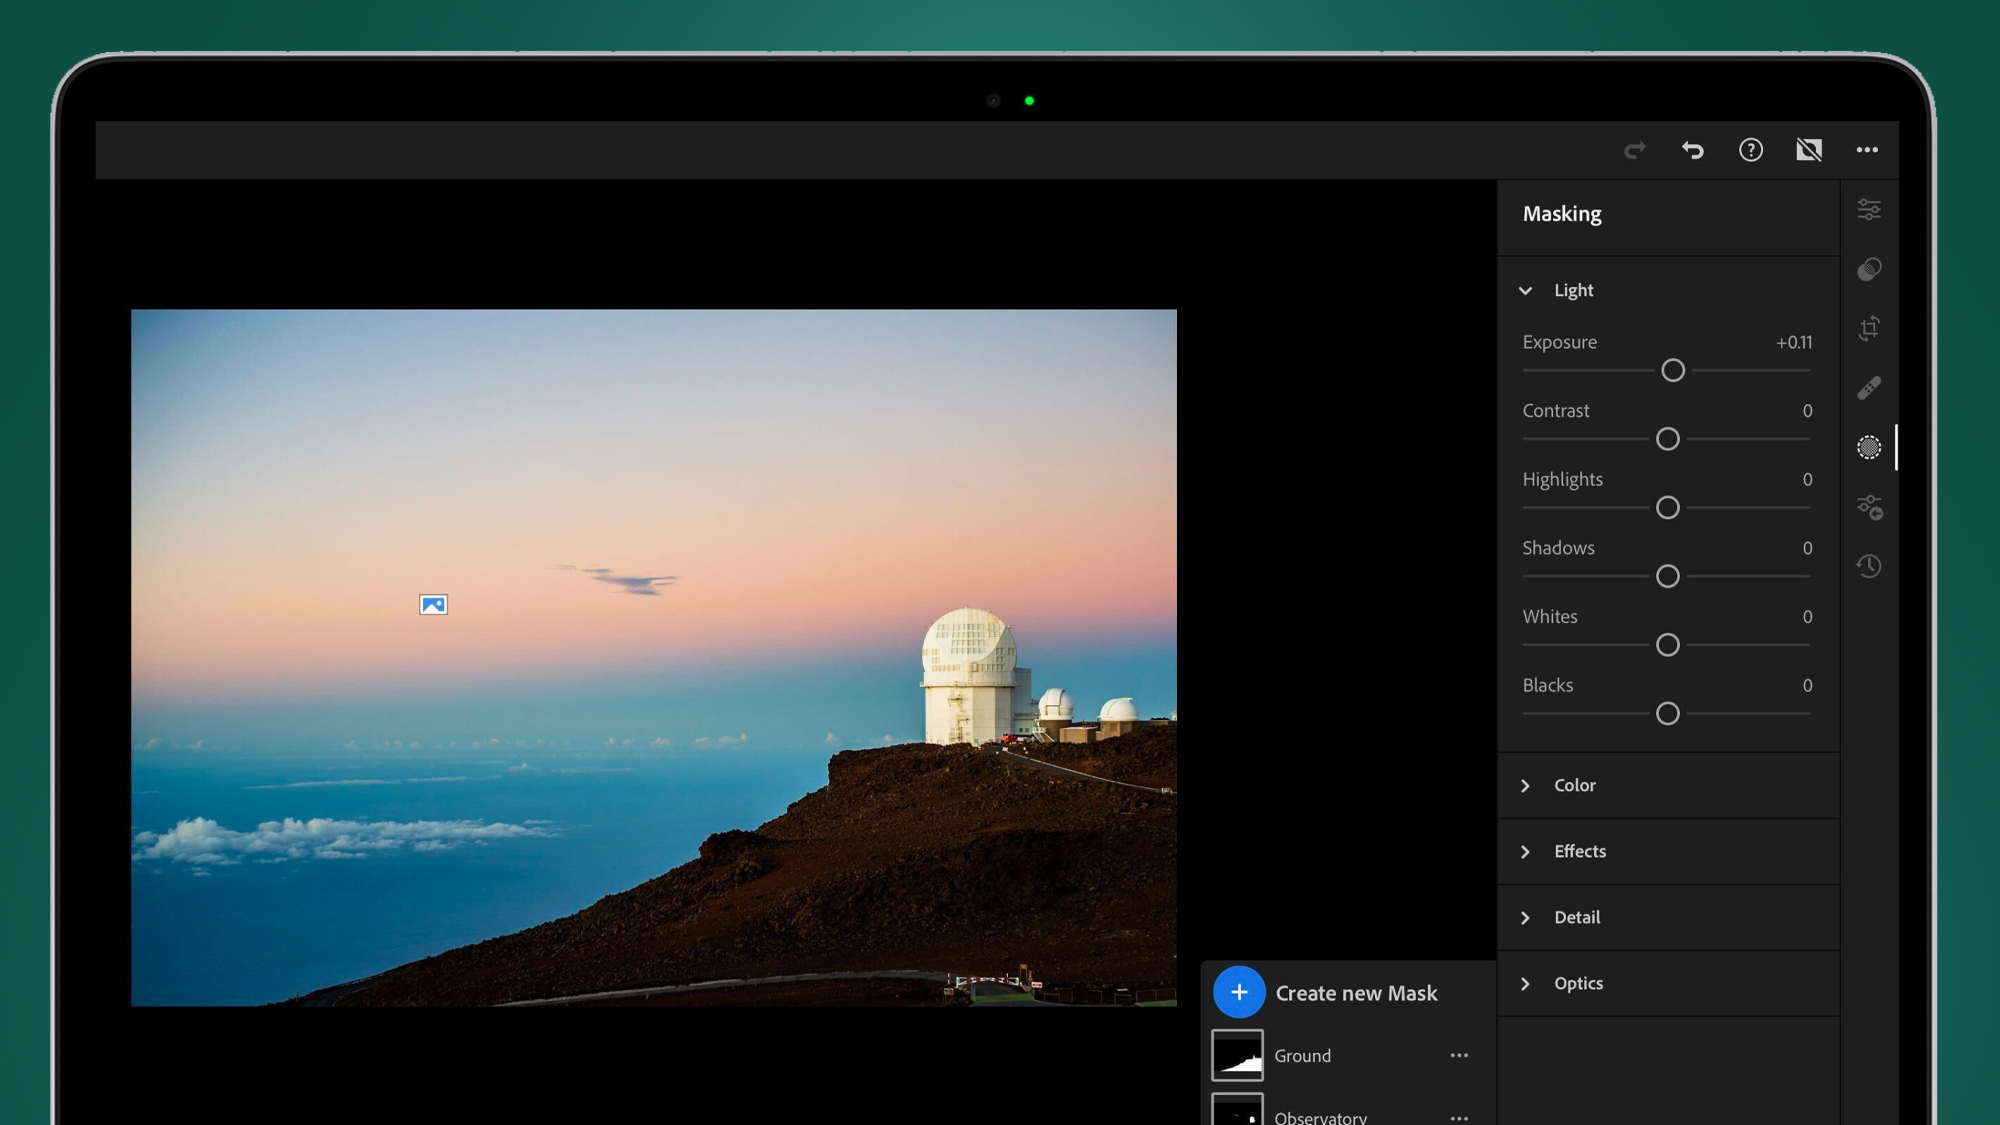 A screenshot of Adobe Lightroom's new masking tools on a landscape photo